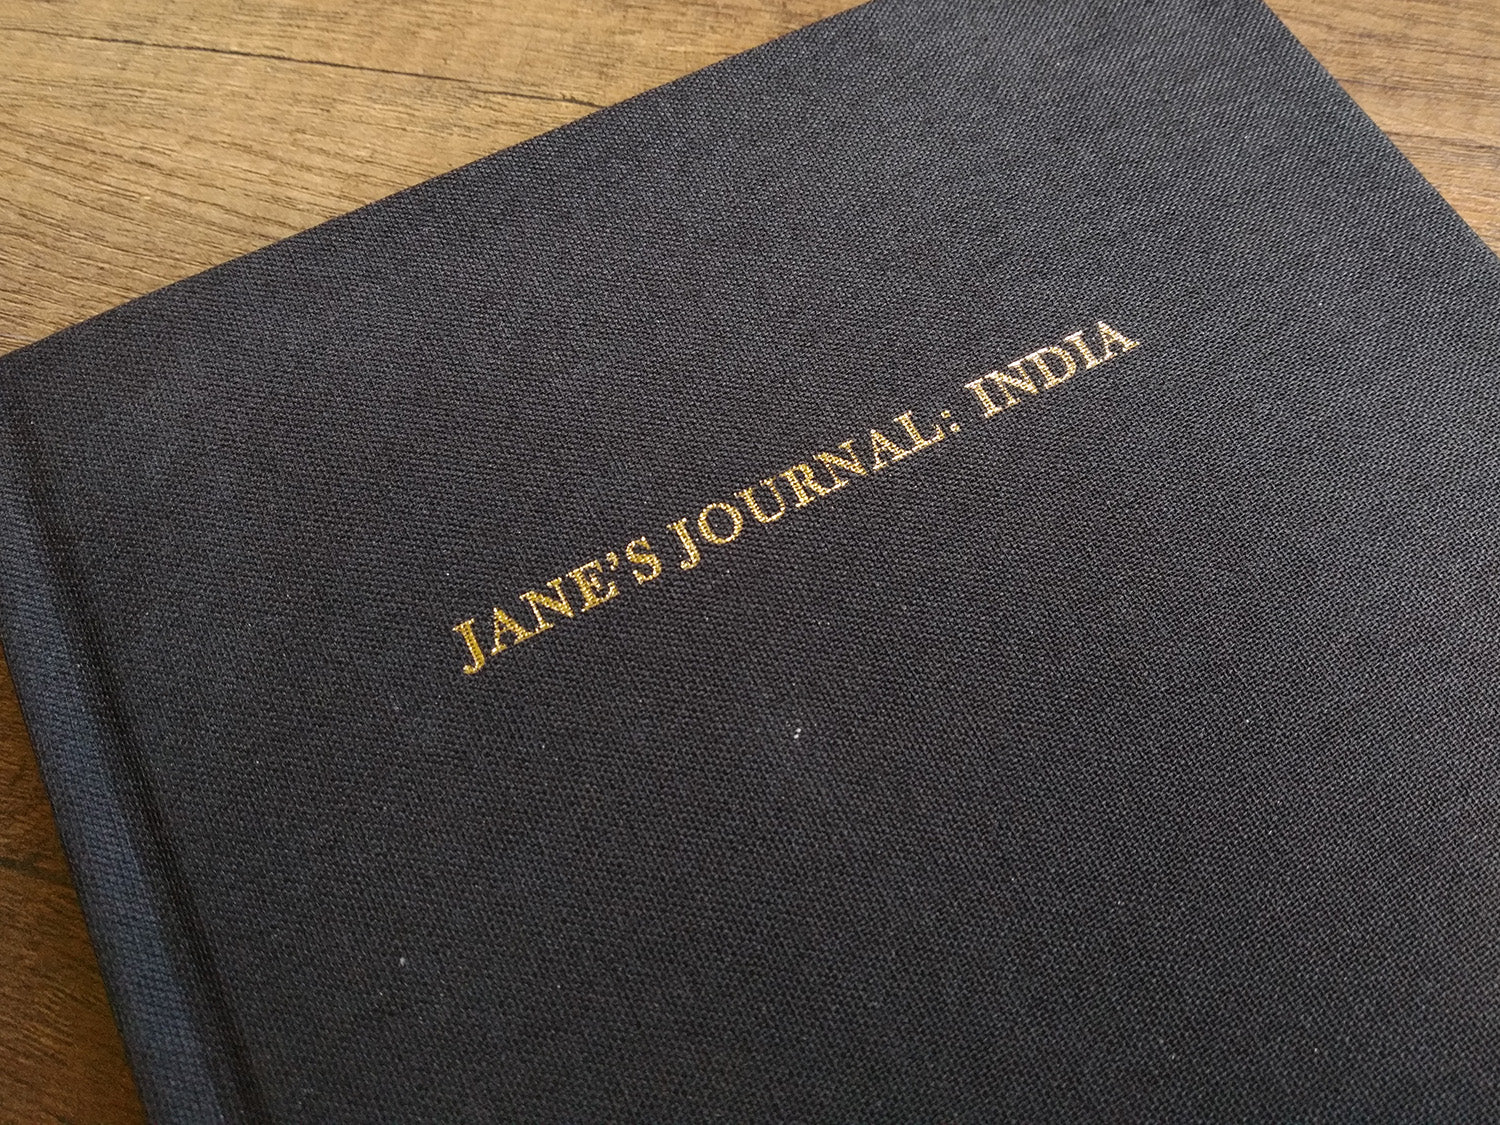 Jane's Journal: India